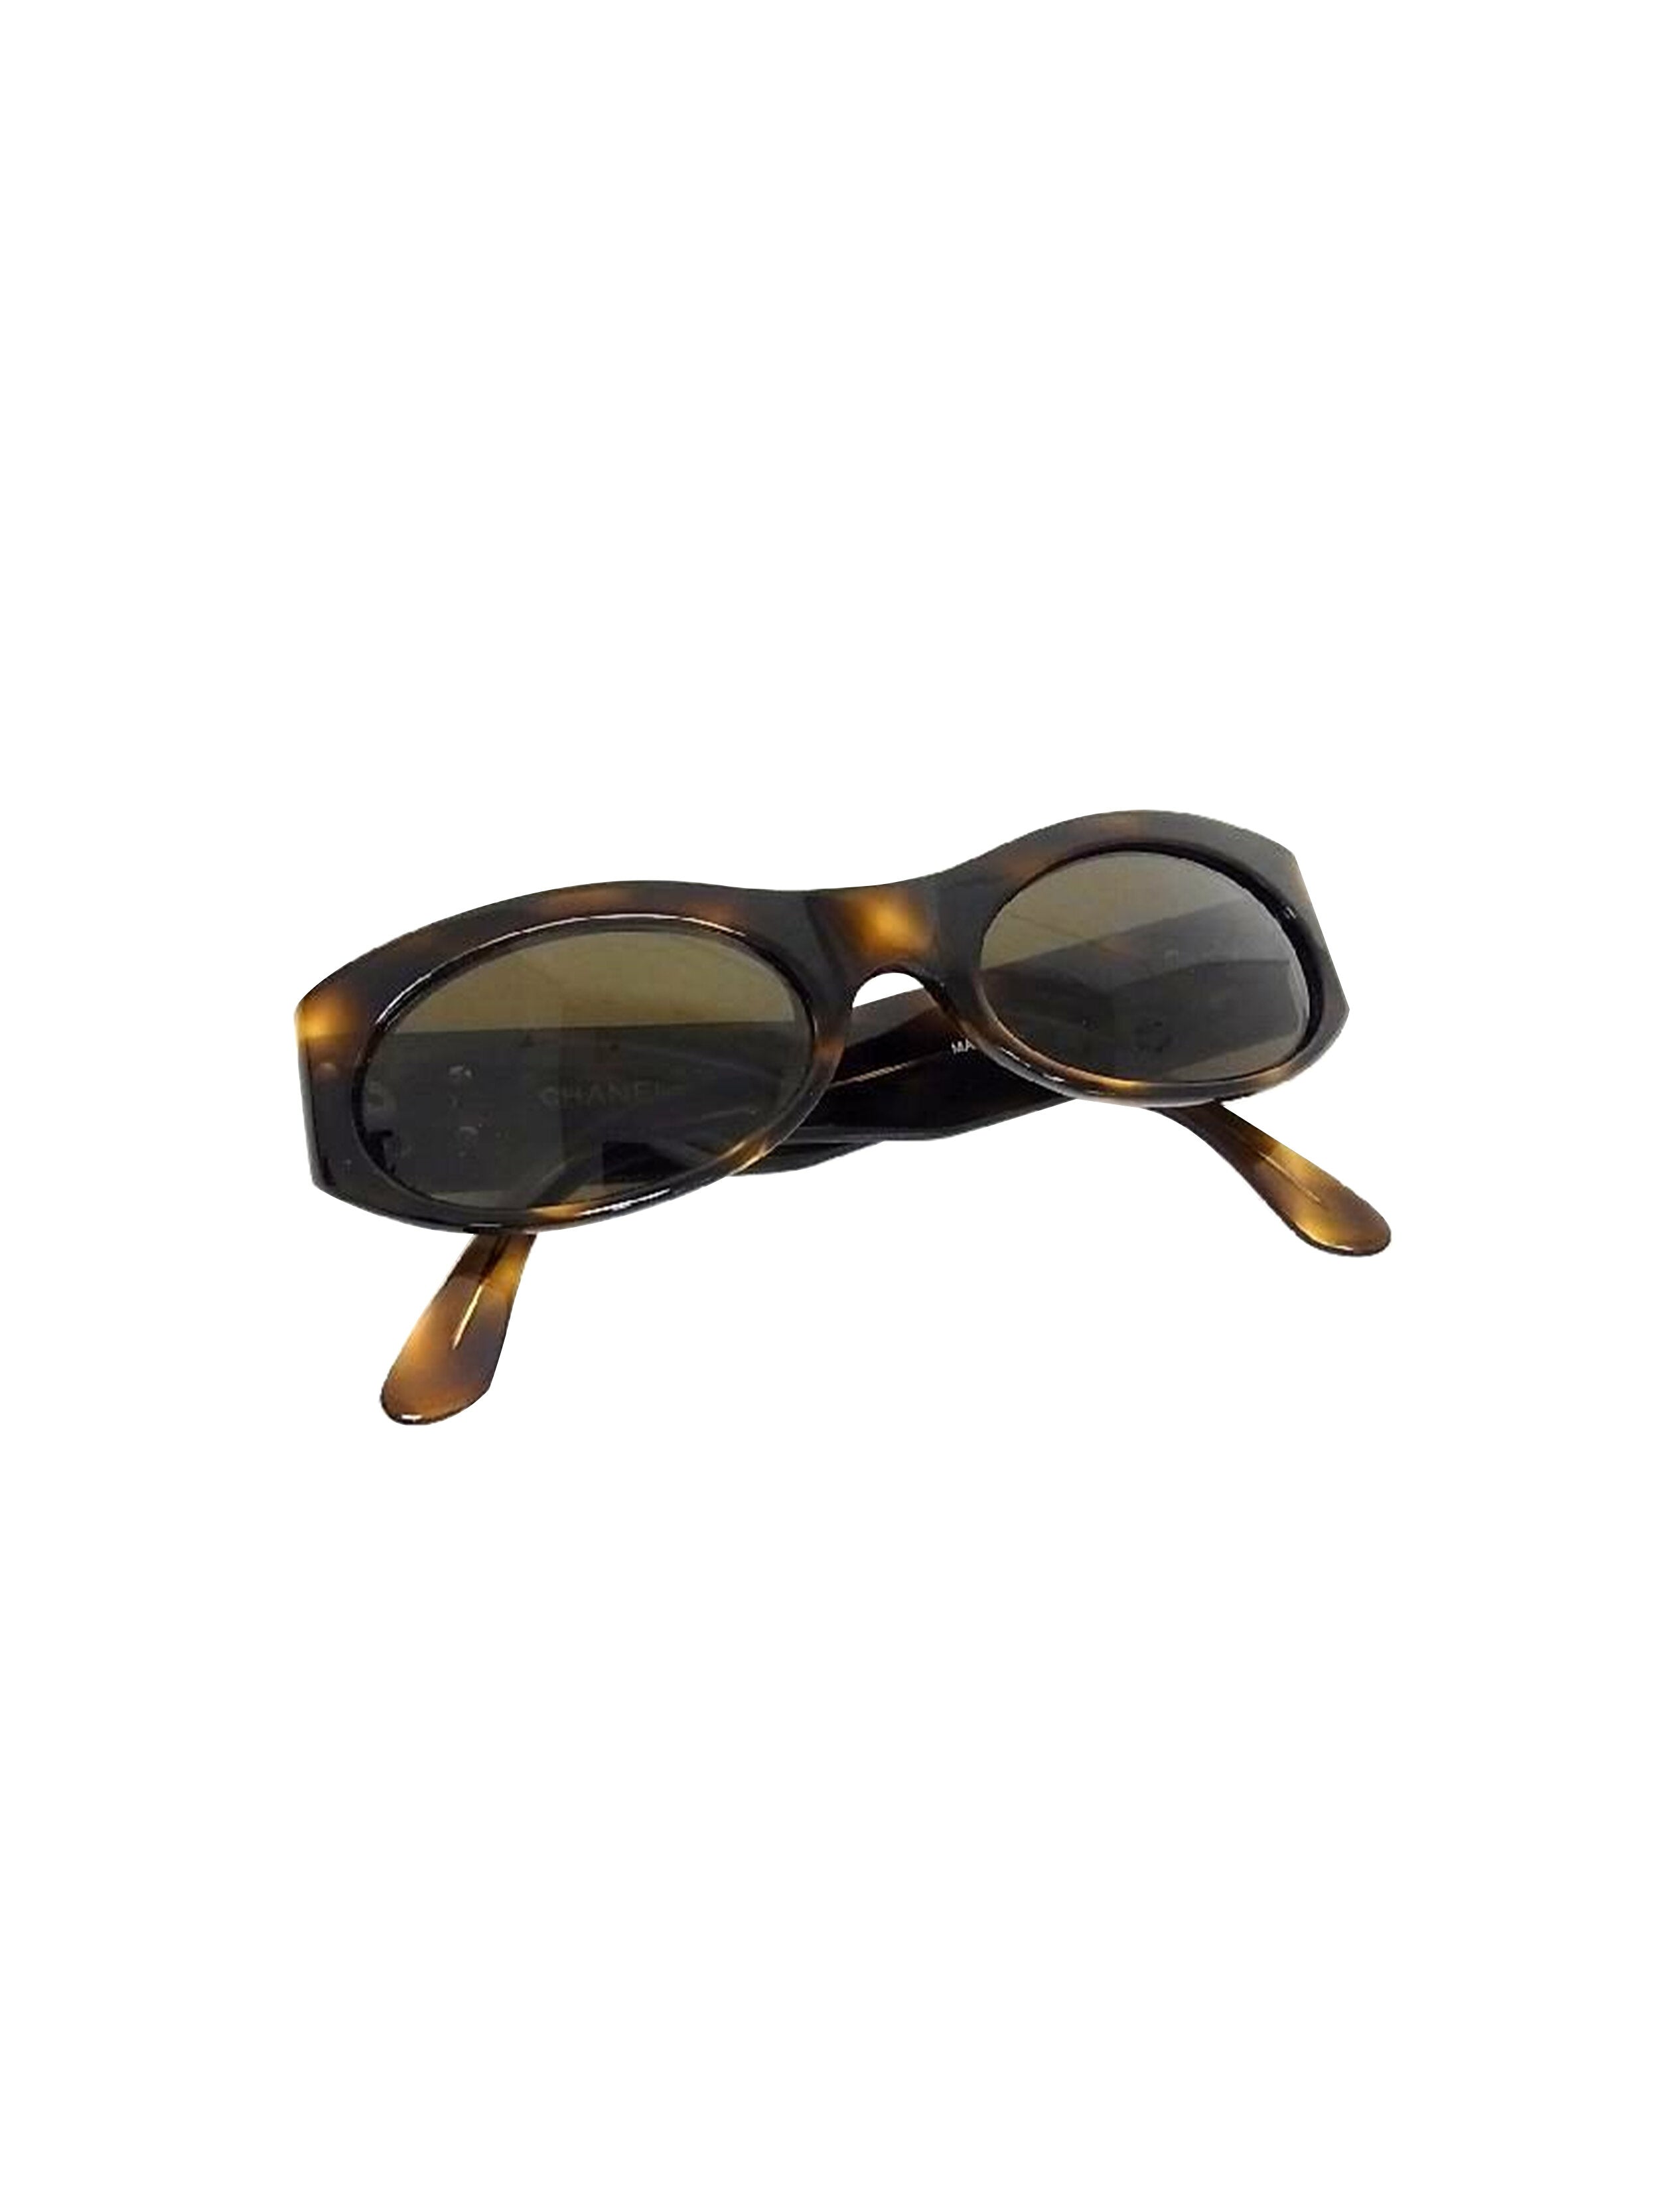 Vintage 1990s CHANEL 4006 101/76 Sunglasses – Including Chanel Case